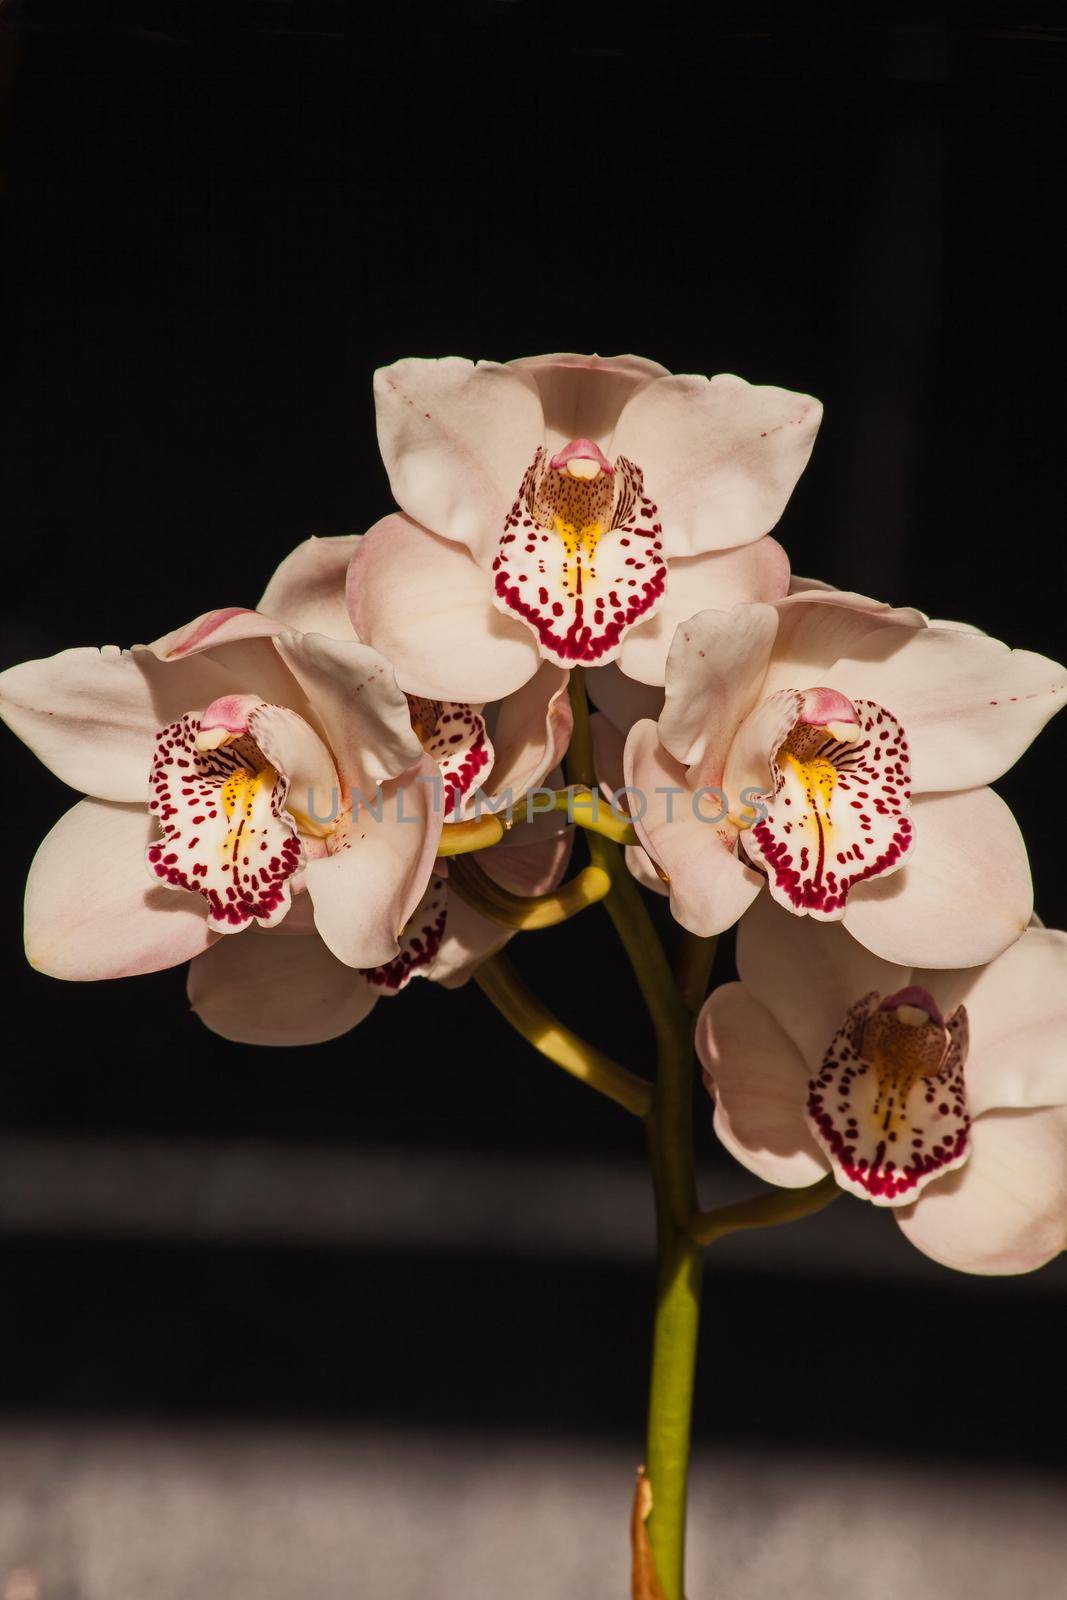 Cymbidium Orchid Flowers 8847 by kobus_peche